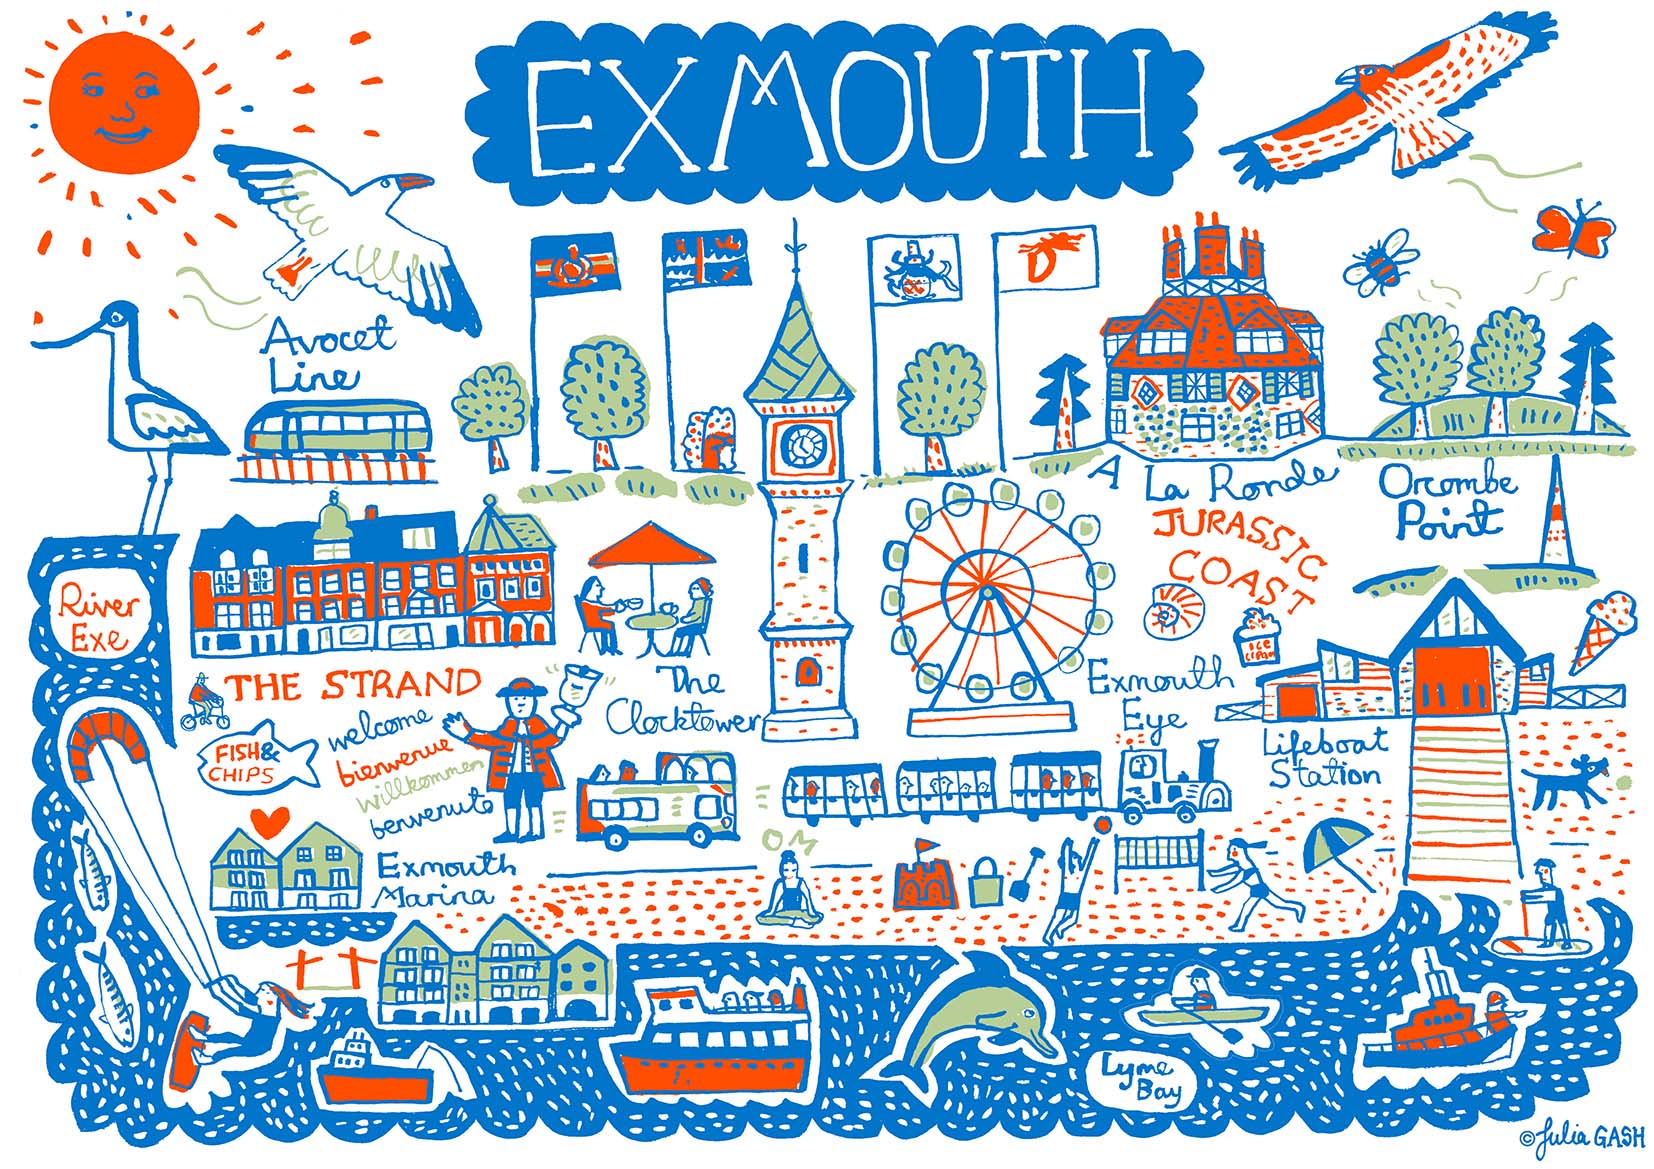 Exmouth Postcard - Julia Gash